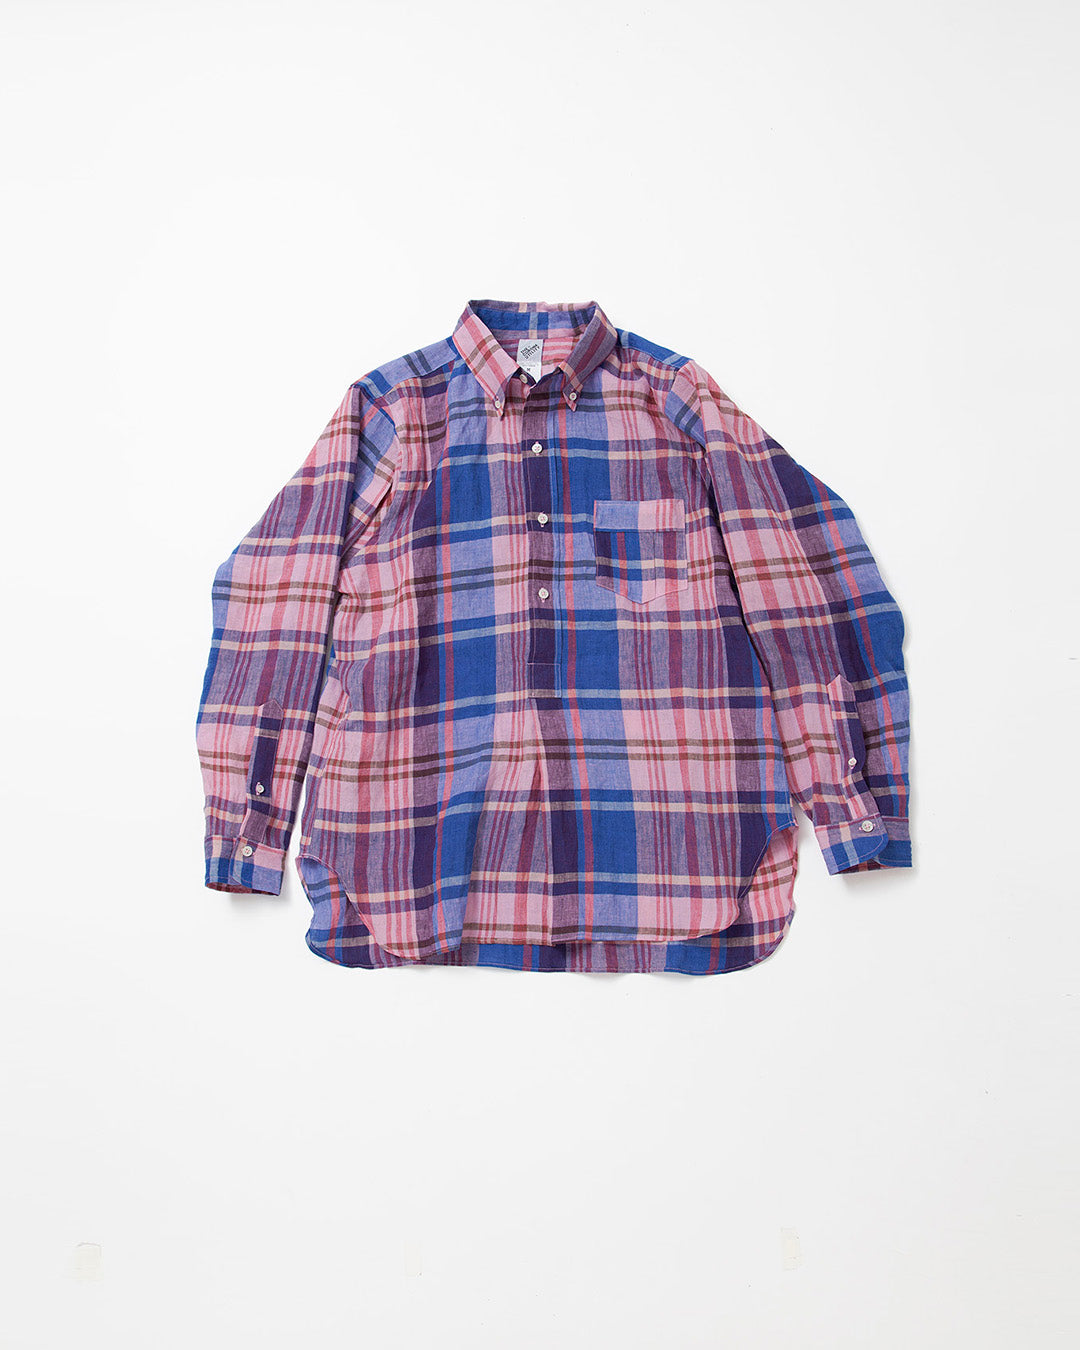 THE CORONA UTILITY - CS005・White Collar Pullover Work Shirt / Pink × Blue